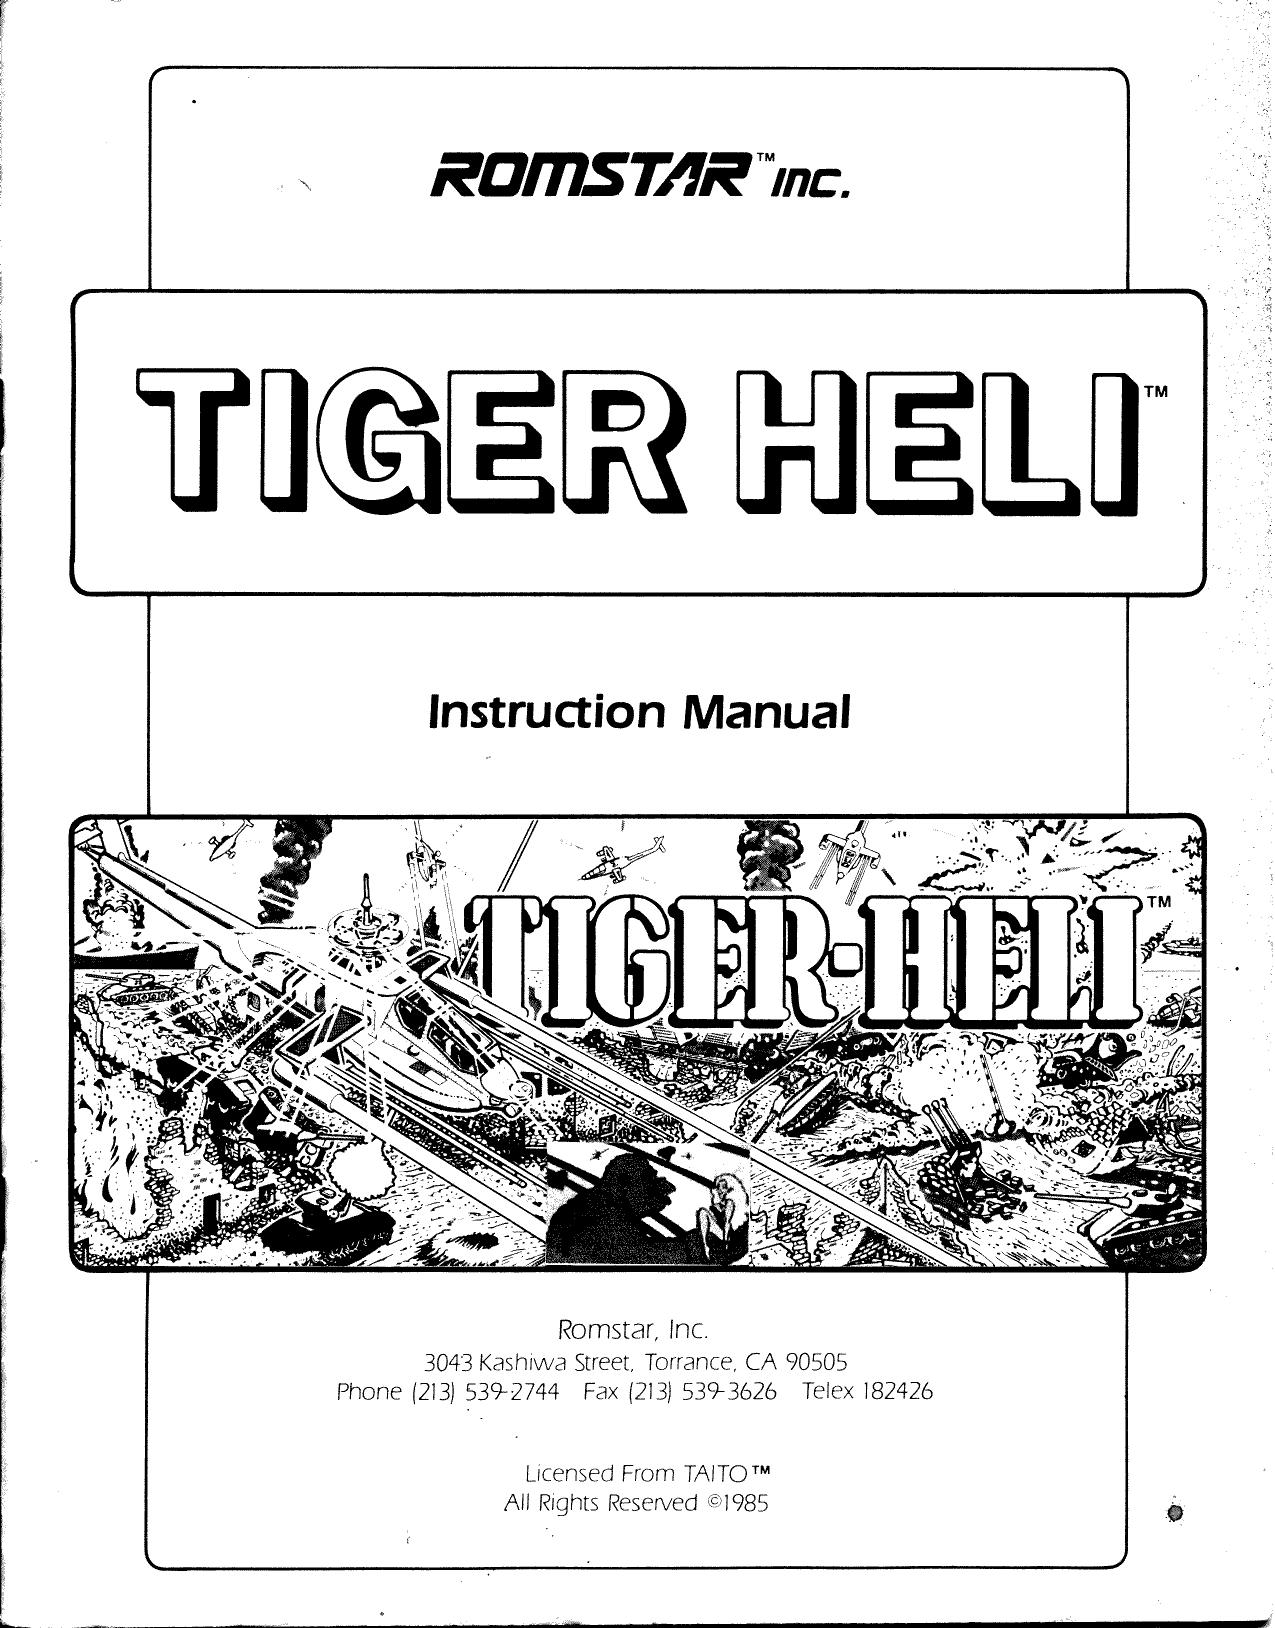 Tiger Heli.man